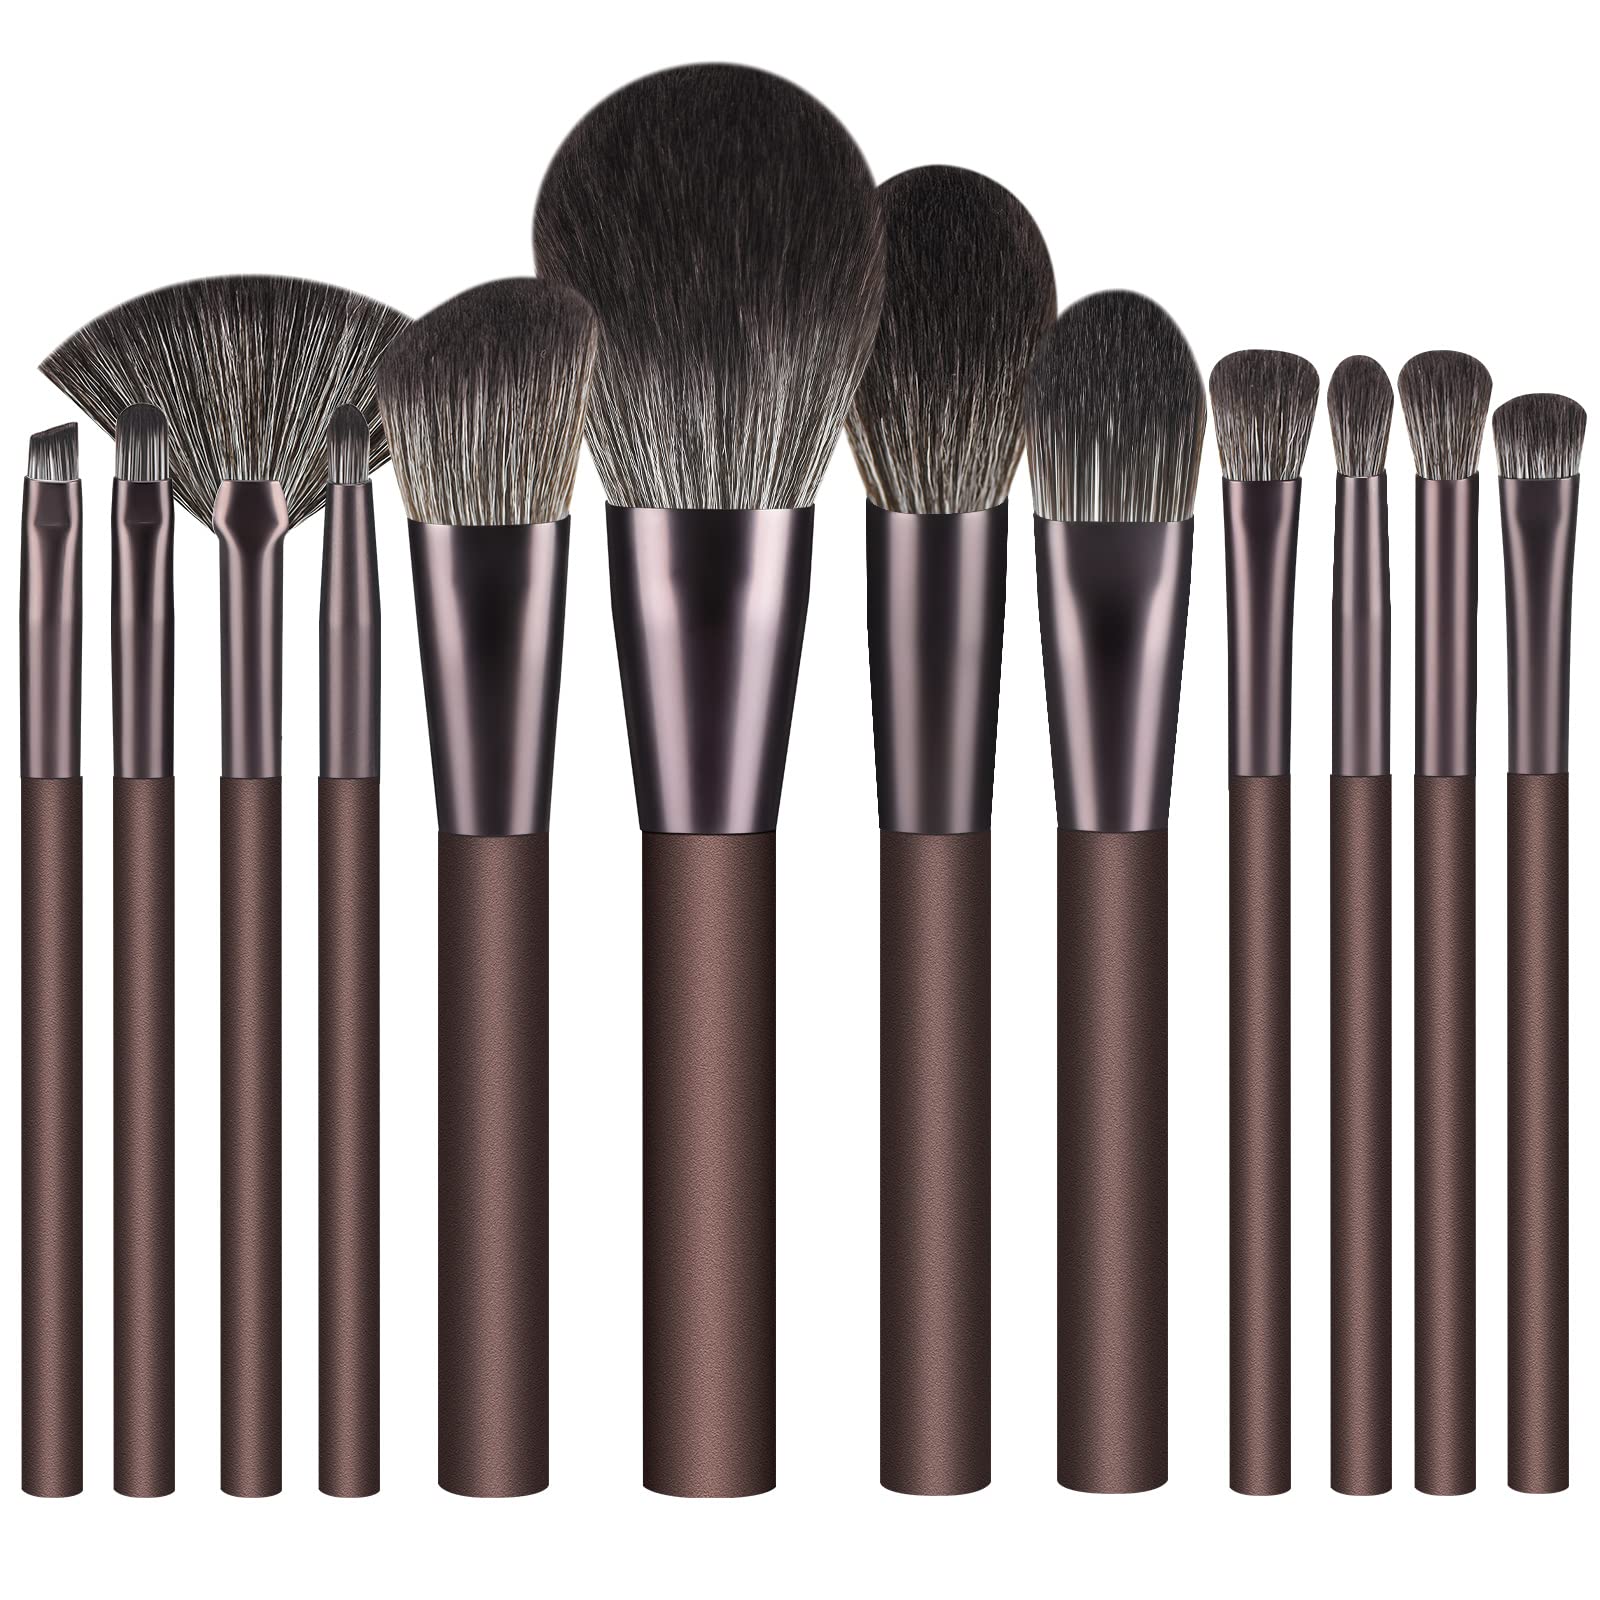 12 PCS Contour Foundation Powder Makeup Brushes Premium Synthetic Hair with Bag